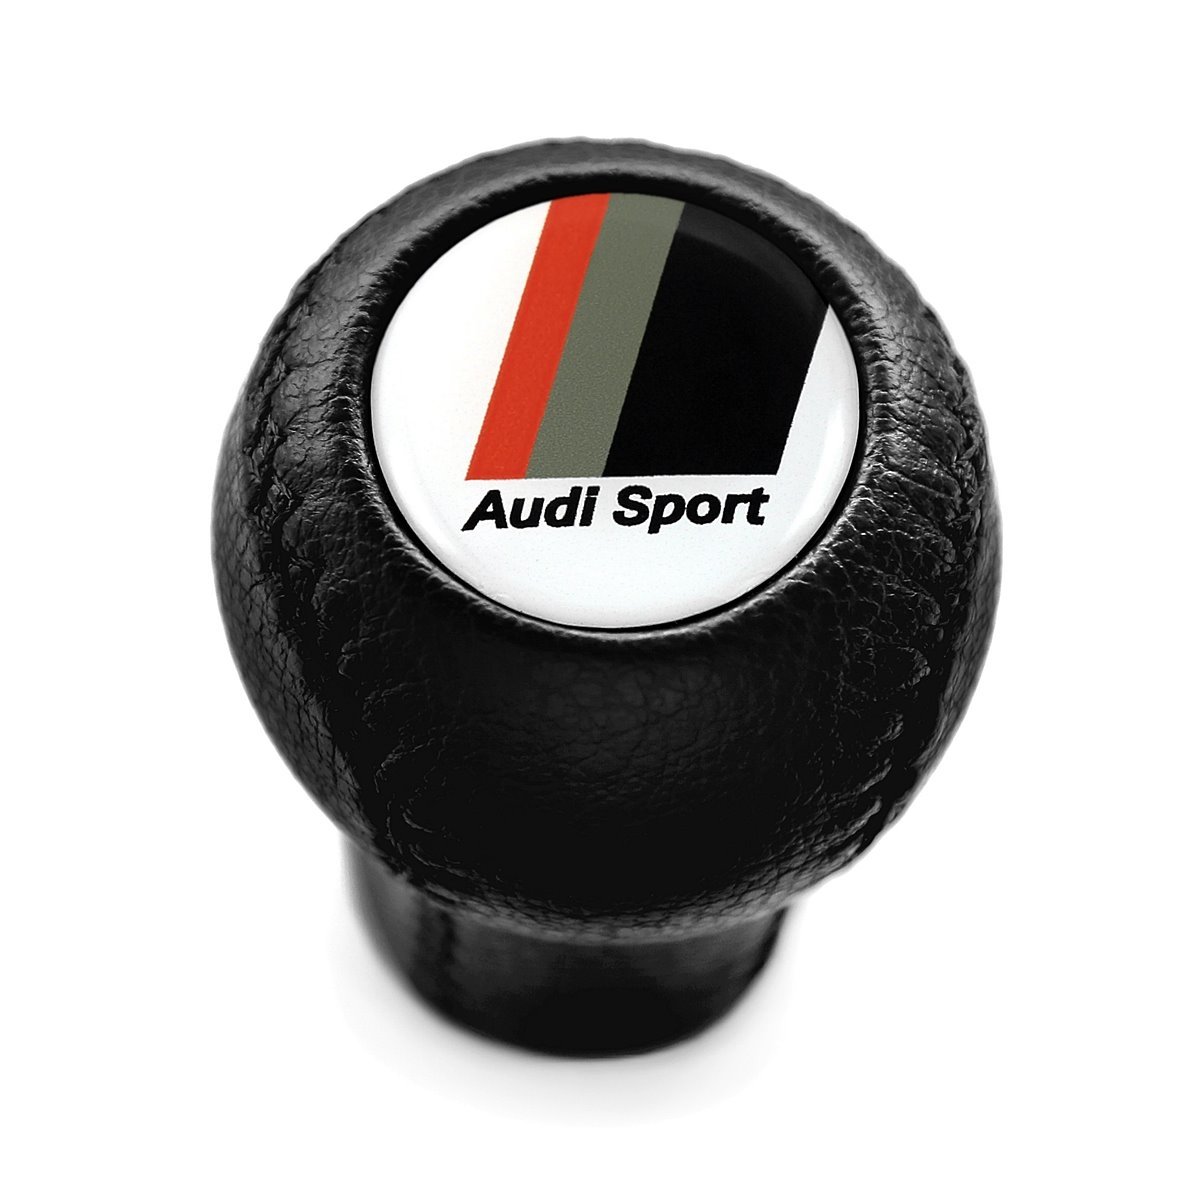 Audi Sport Genuine Leather Short Shift Knob 4-5-6 Speed Manual